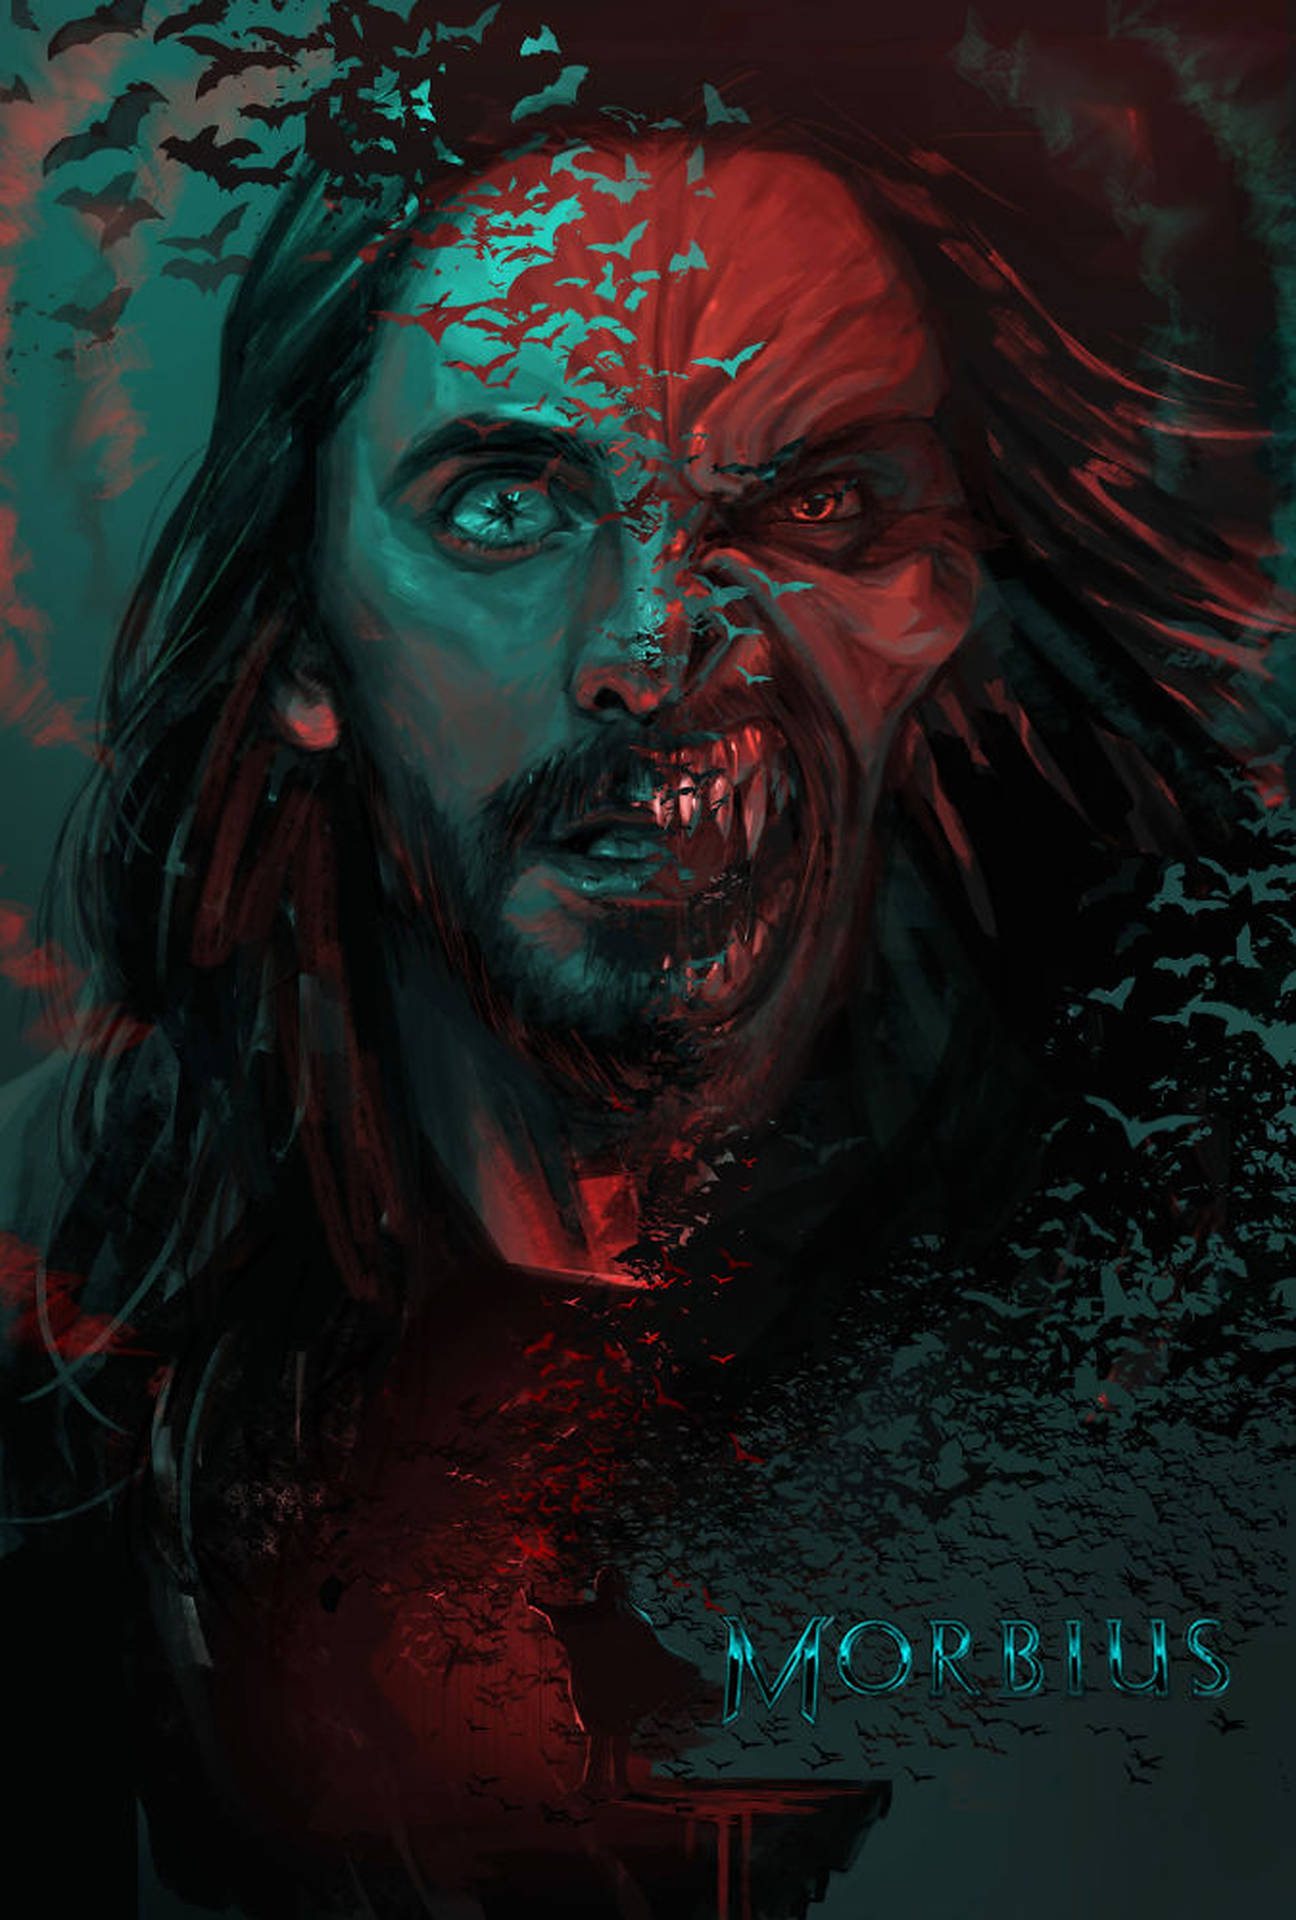 Caption: Evocative Digital Painting Of Morbius